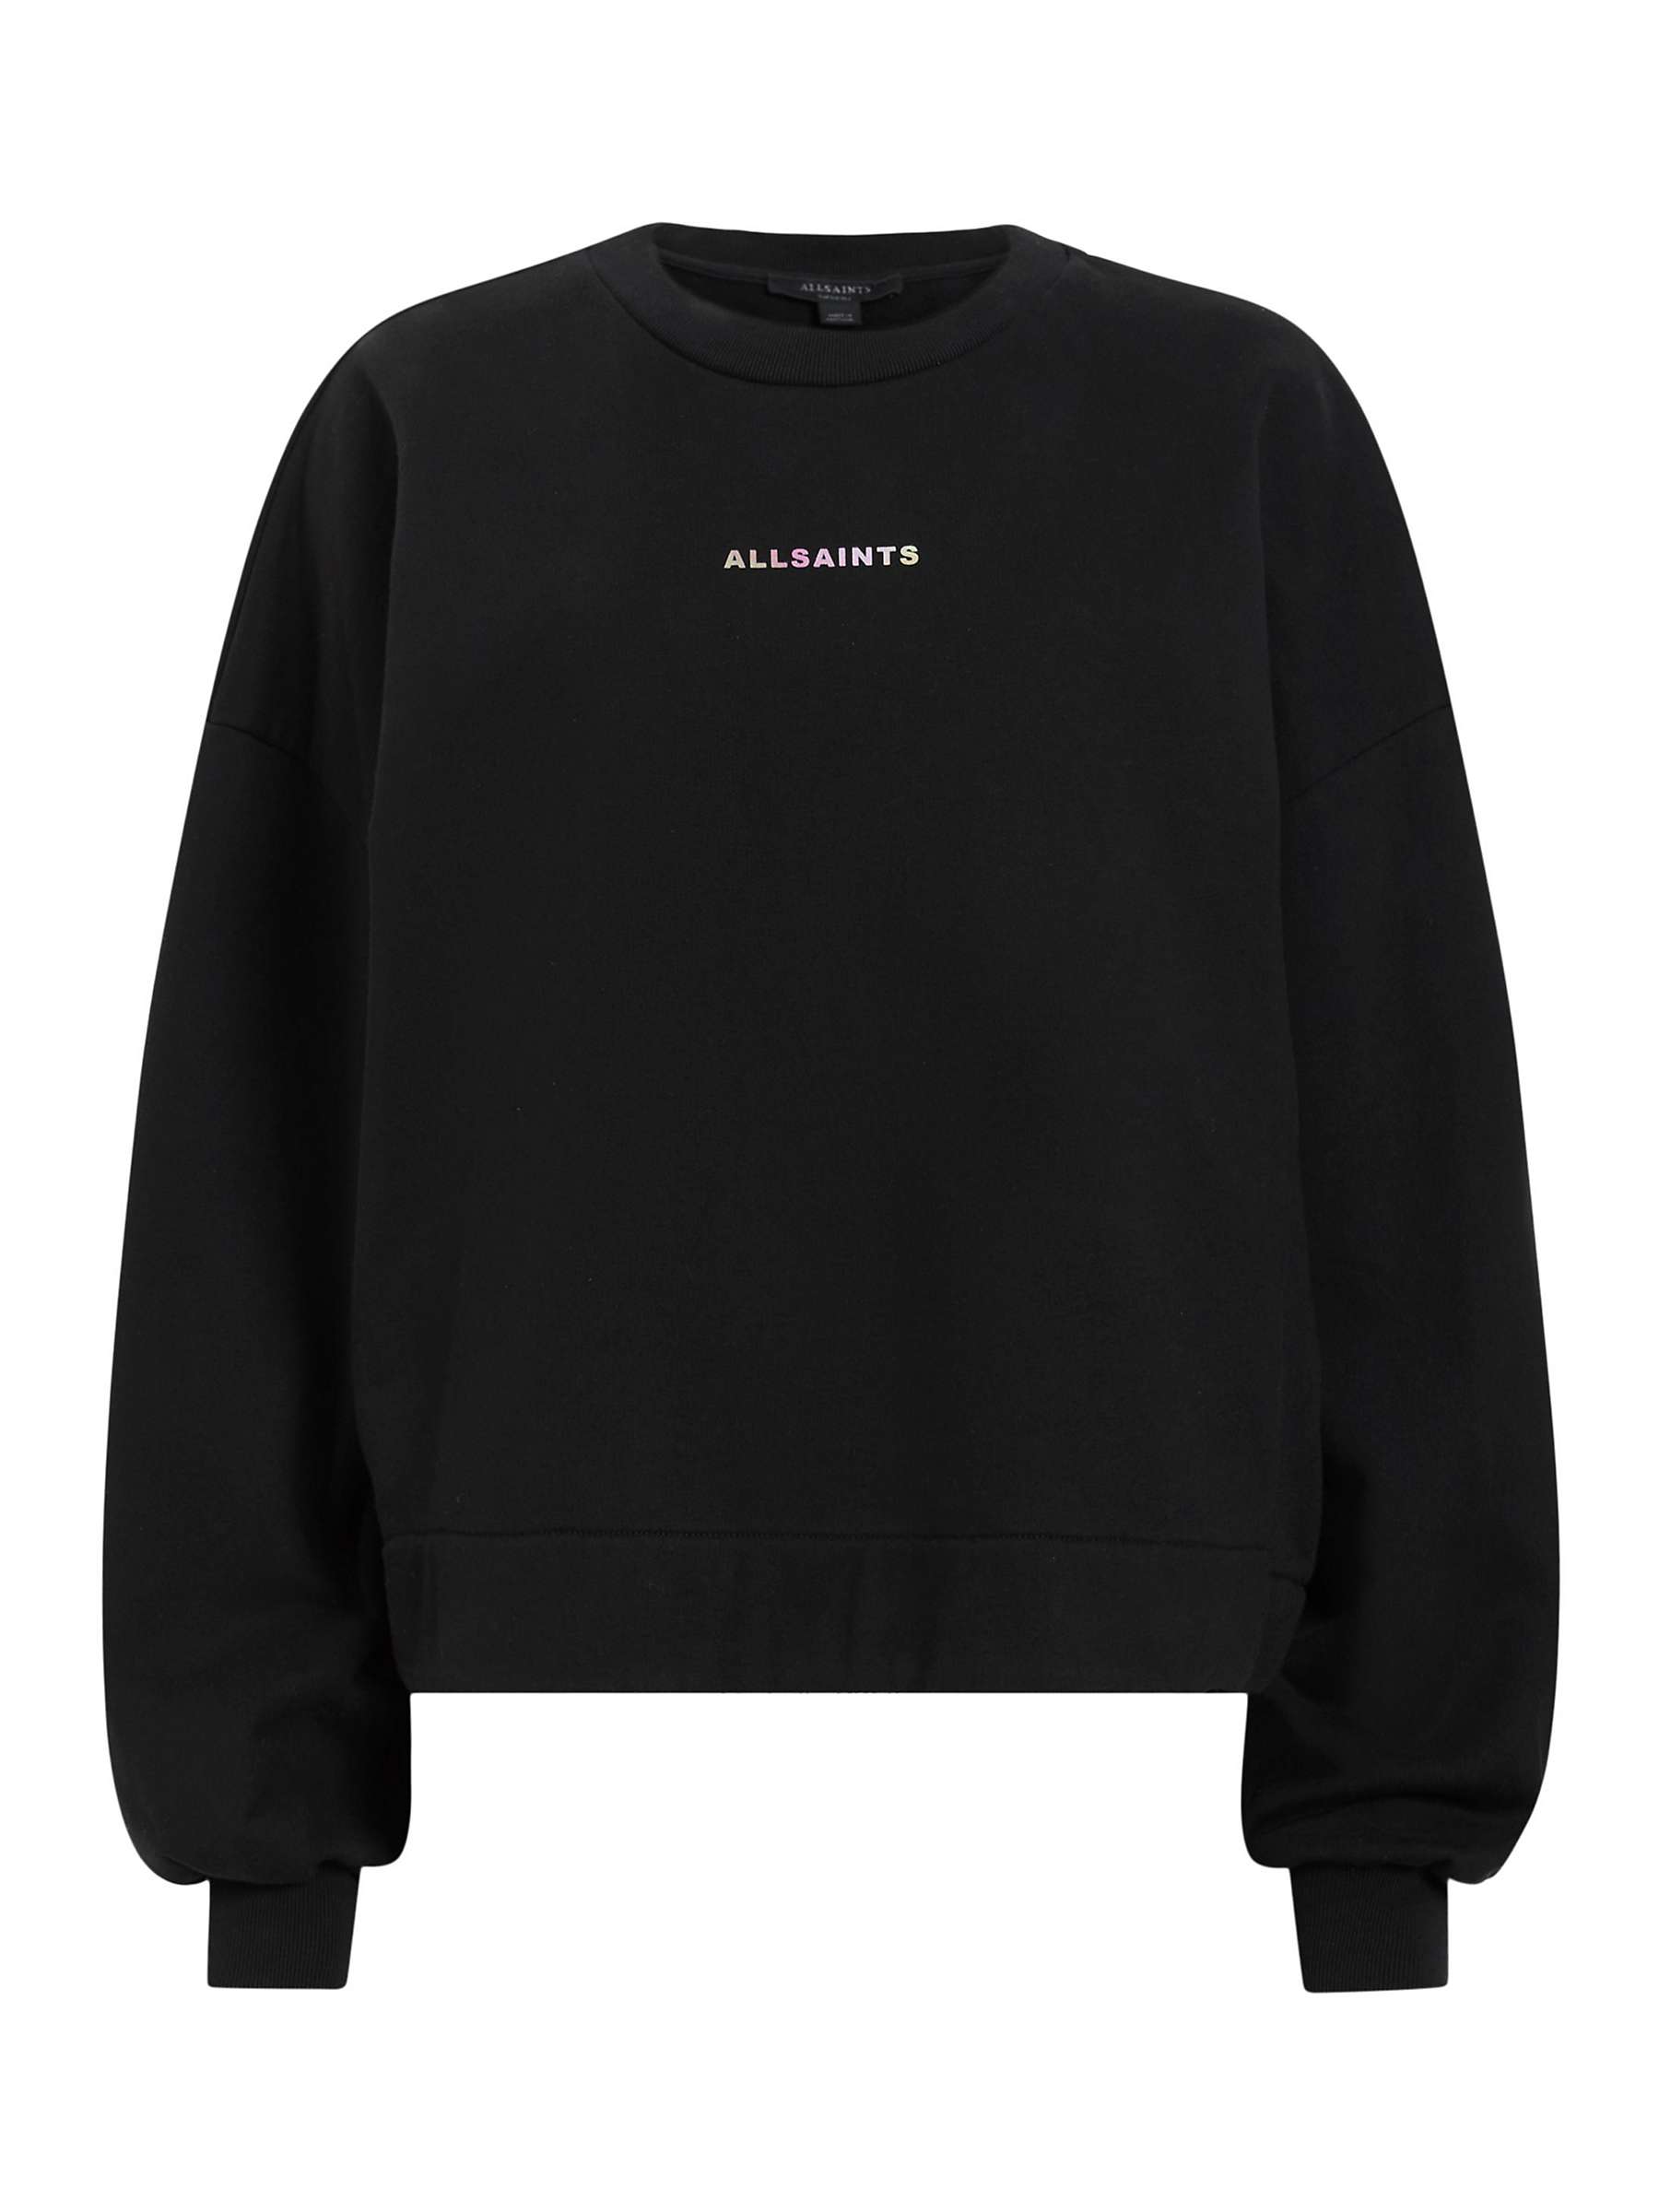 Buy AllSaints Disc Lila Orgnic Cotton Sweatshirt, Black Online at johnlewis.com